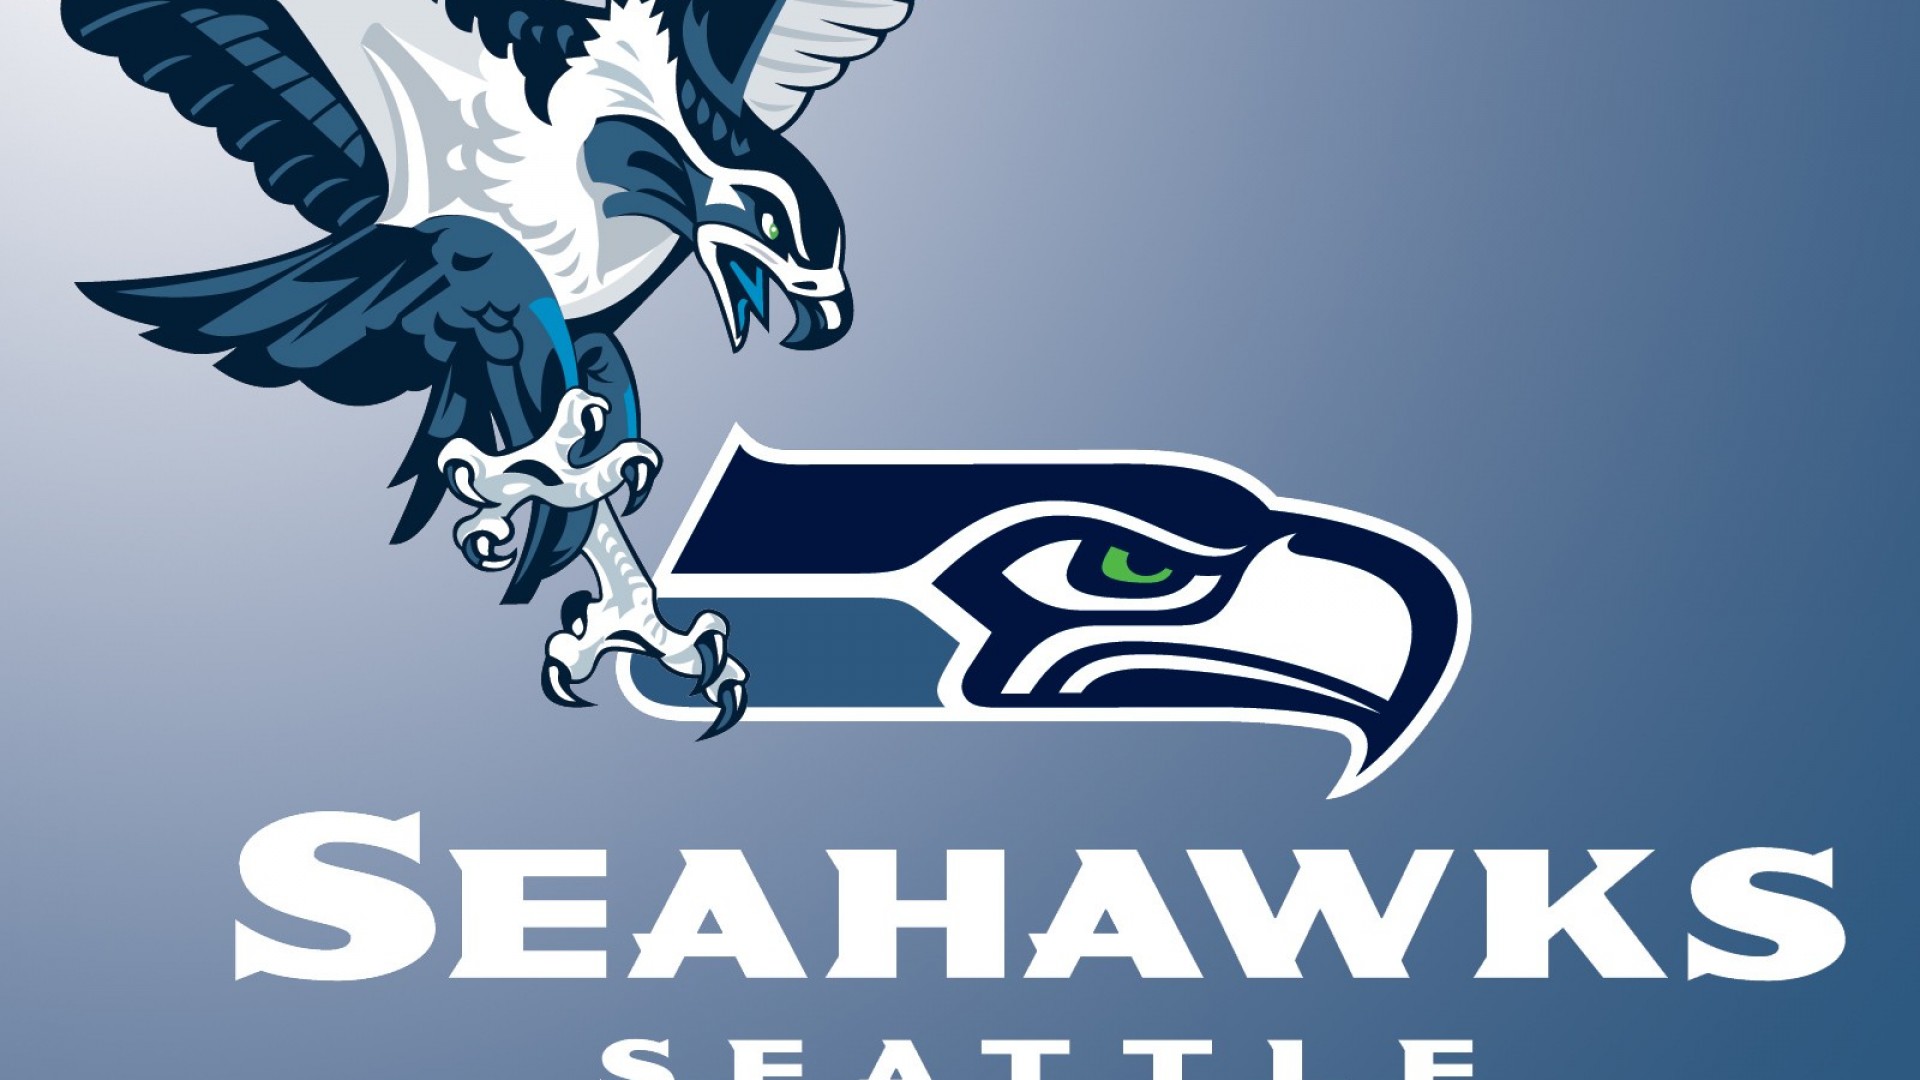 WallpaperUniversitycom Seattle Seahawks NFL Backgrounds